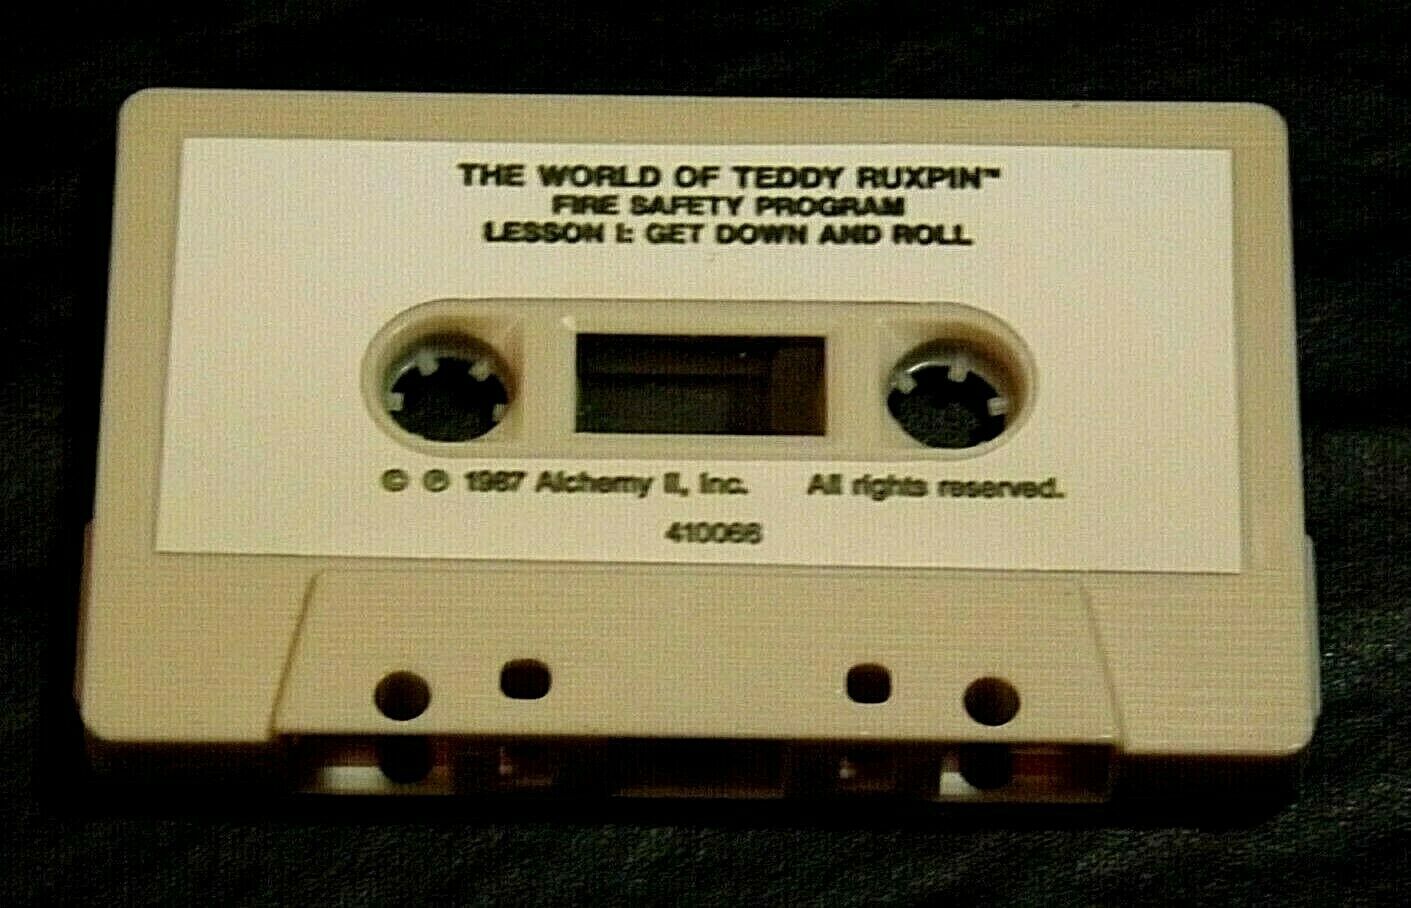 Teddy Ruxpin Fire Safety Program  Lesson 1 Audio Tape 1986 Worlds Of Wonder